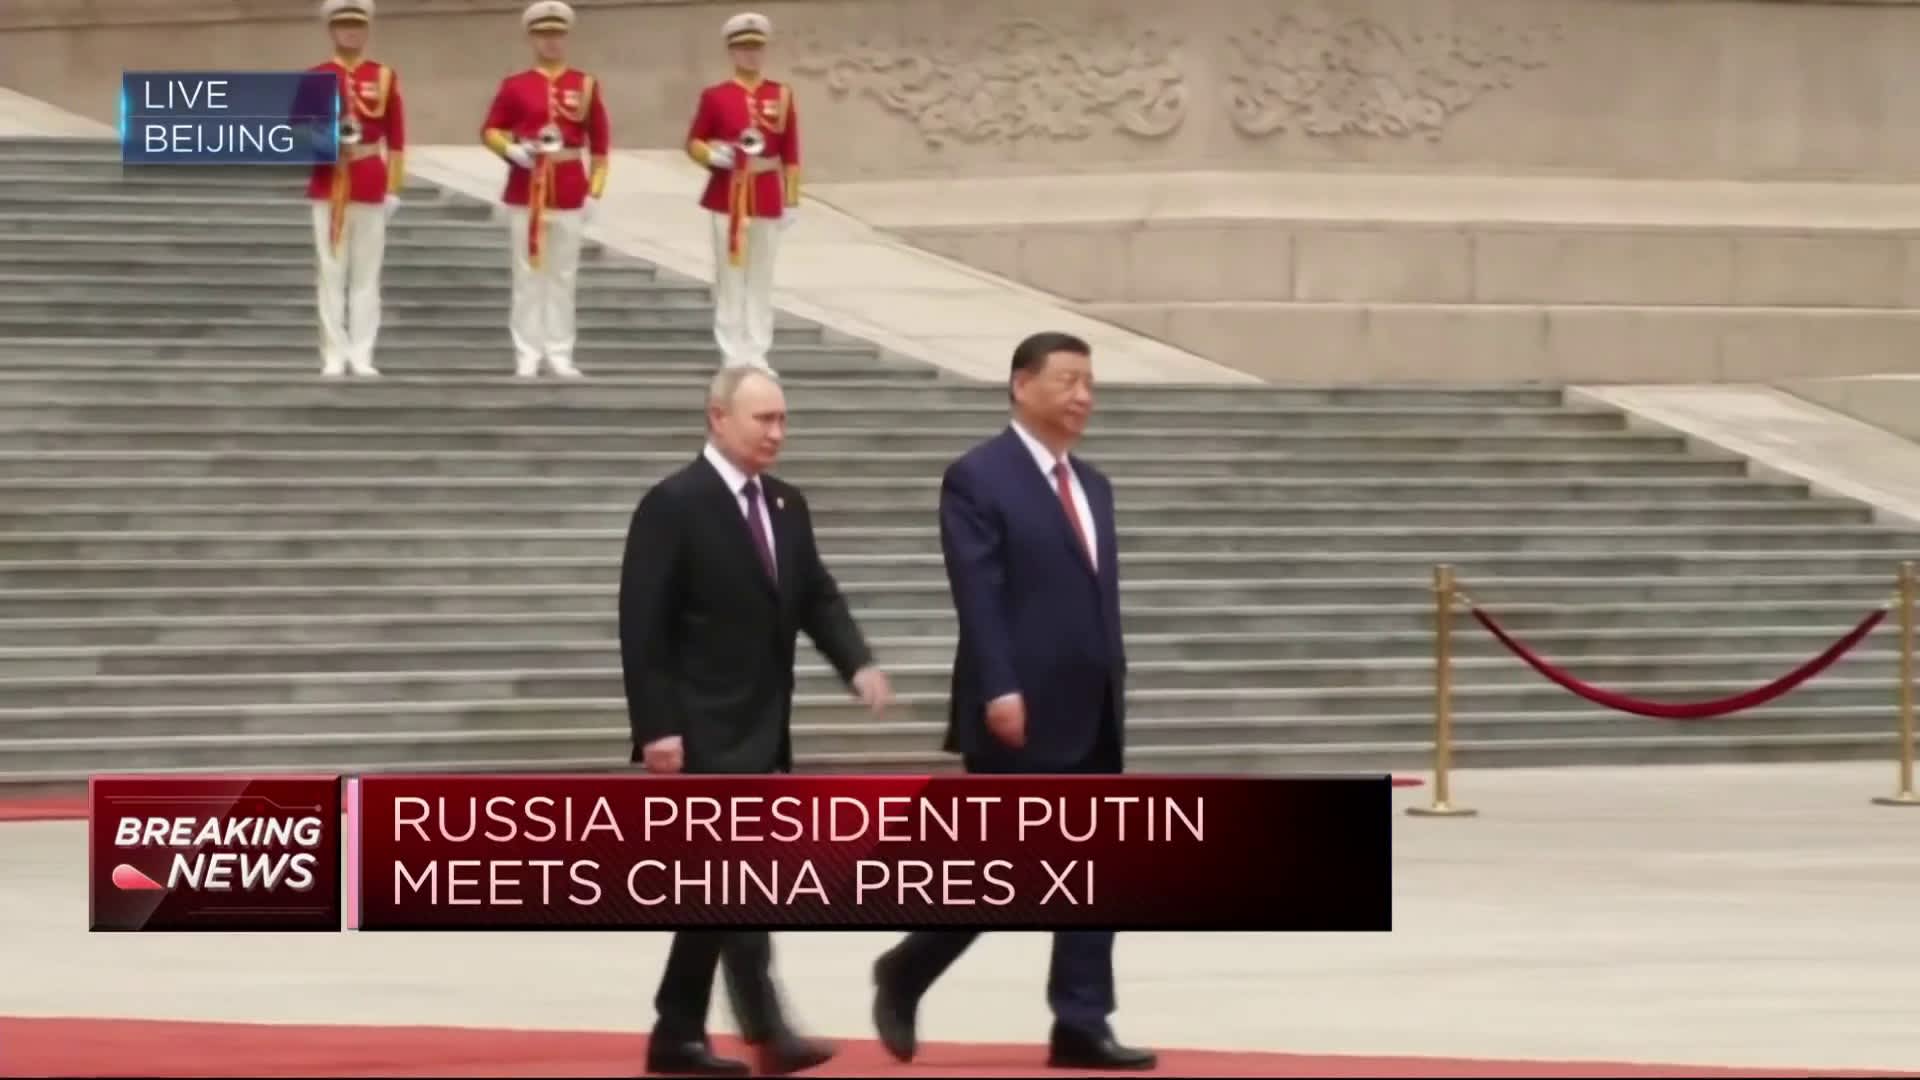 Xi welcomes Putin to China as both leaders seek to bolster strategic ties